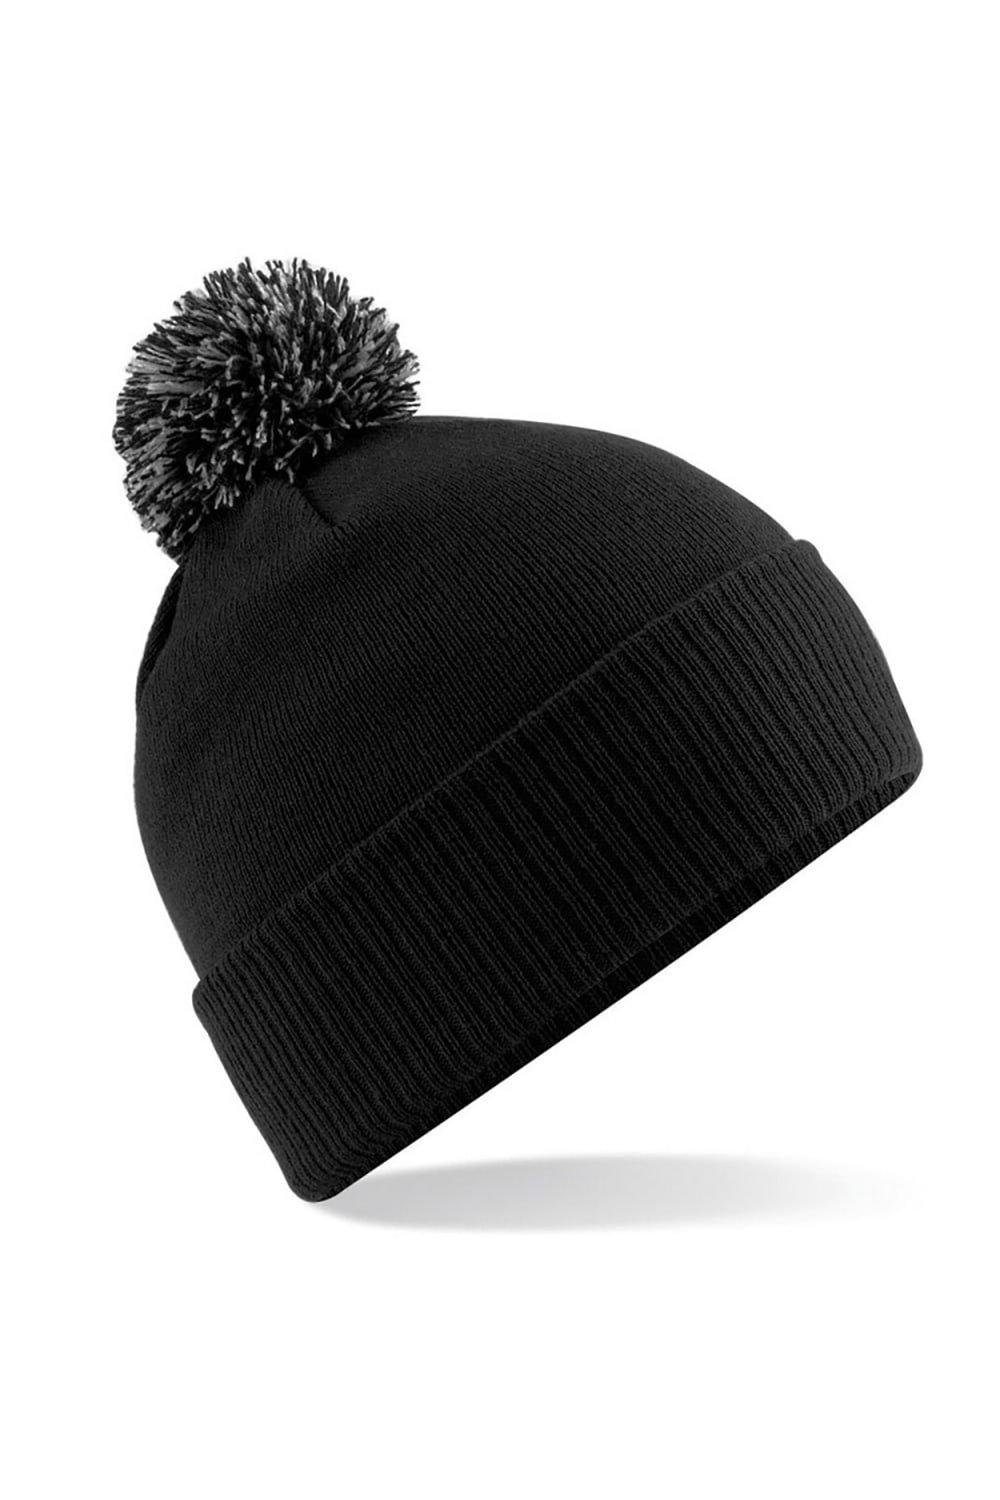 Зимняя шапка Snowstar Duo Extreme Beechfield, черный зимняя шапка snowstar duo extreme beechfield серый